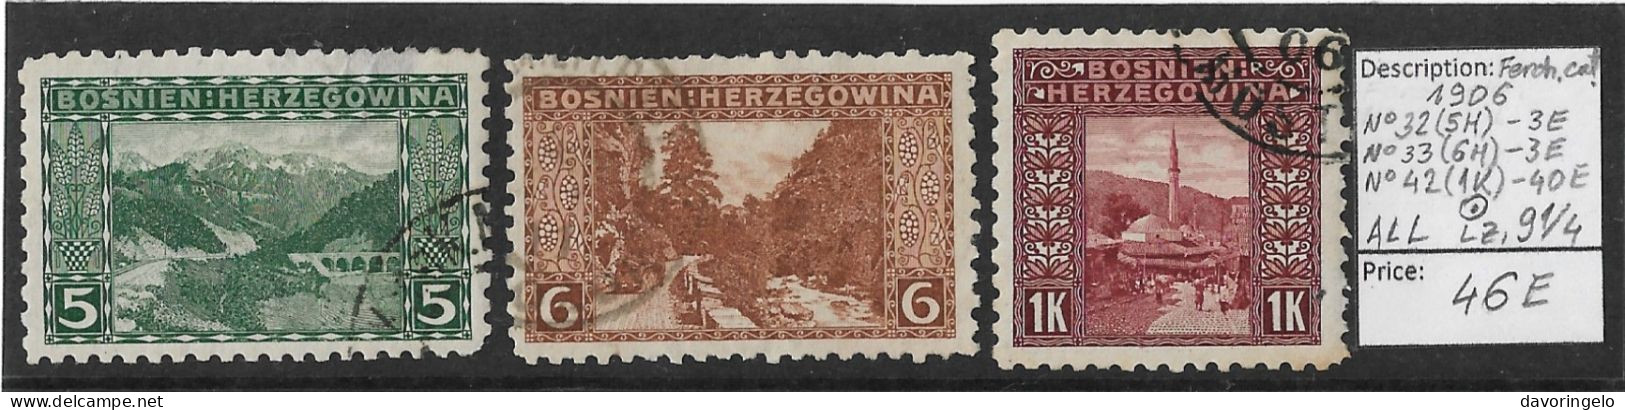 Bosnia-Herzegovina/Austria-Hungary, 1906 Year, No 32, 33,42, ALL Perf. 9 1/4 - Bosnien-Herzegowina